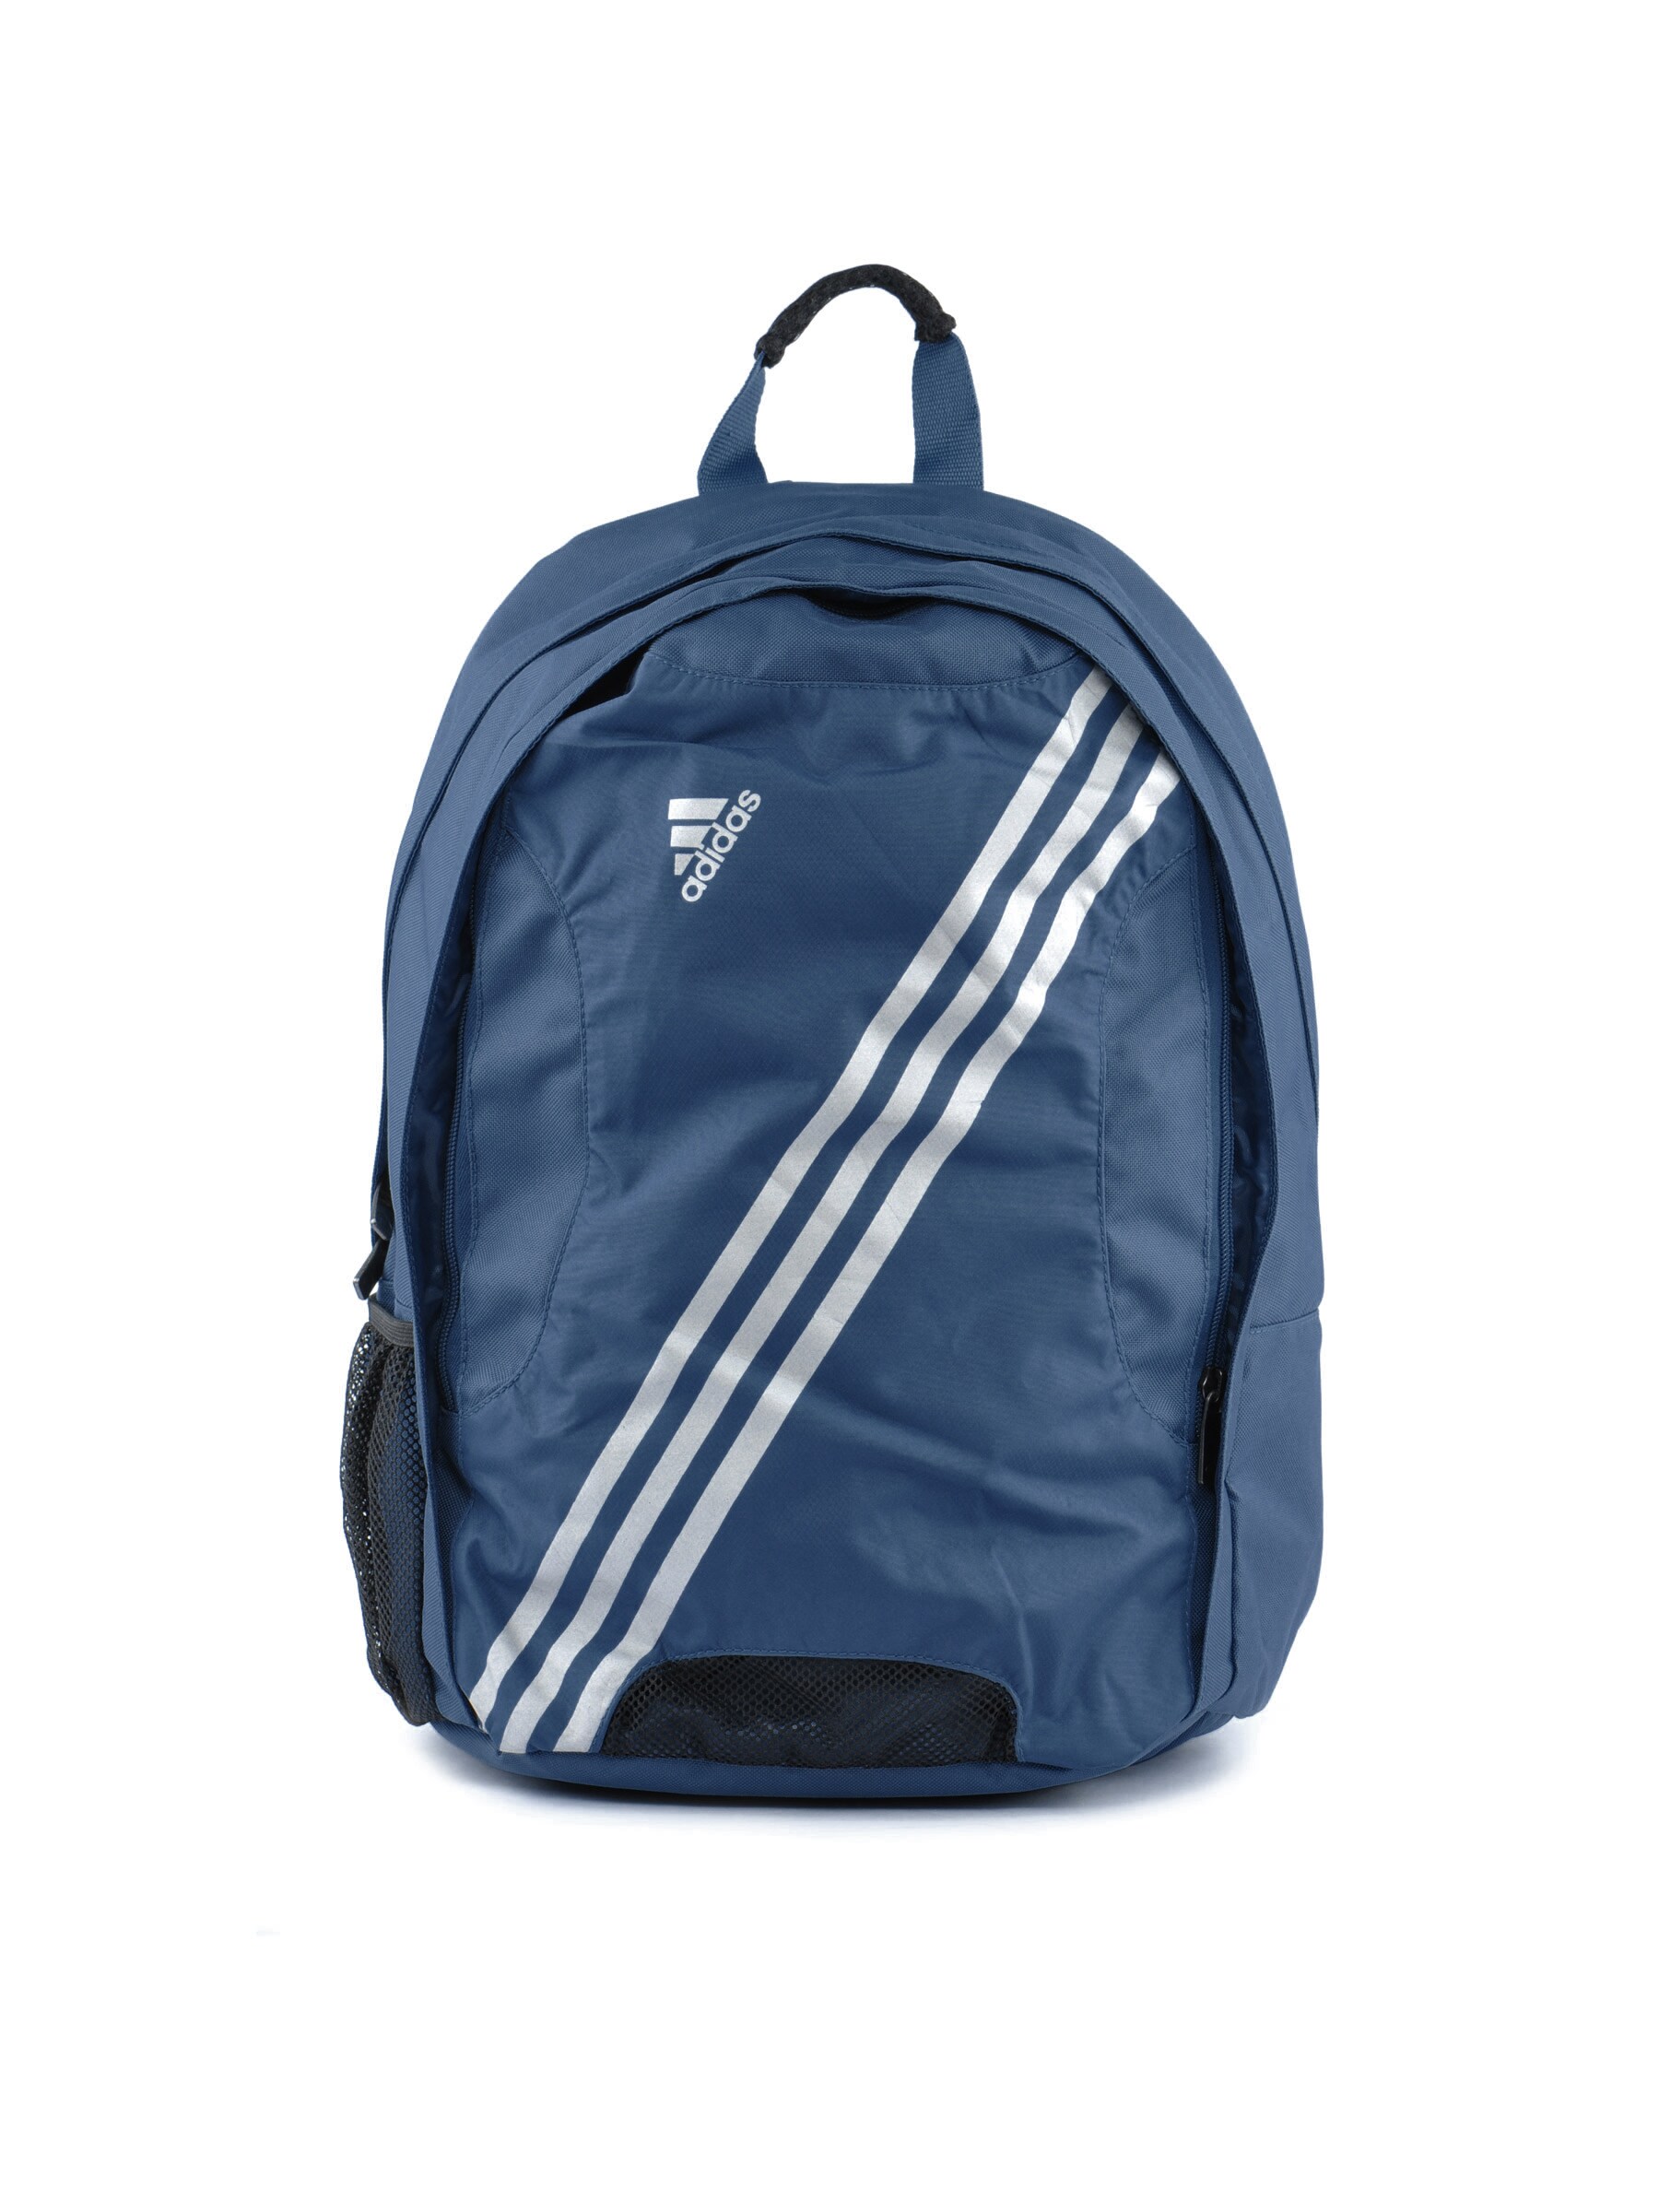 ADIDAS Unisex AL Blue Backpack